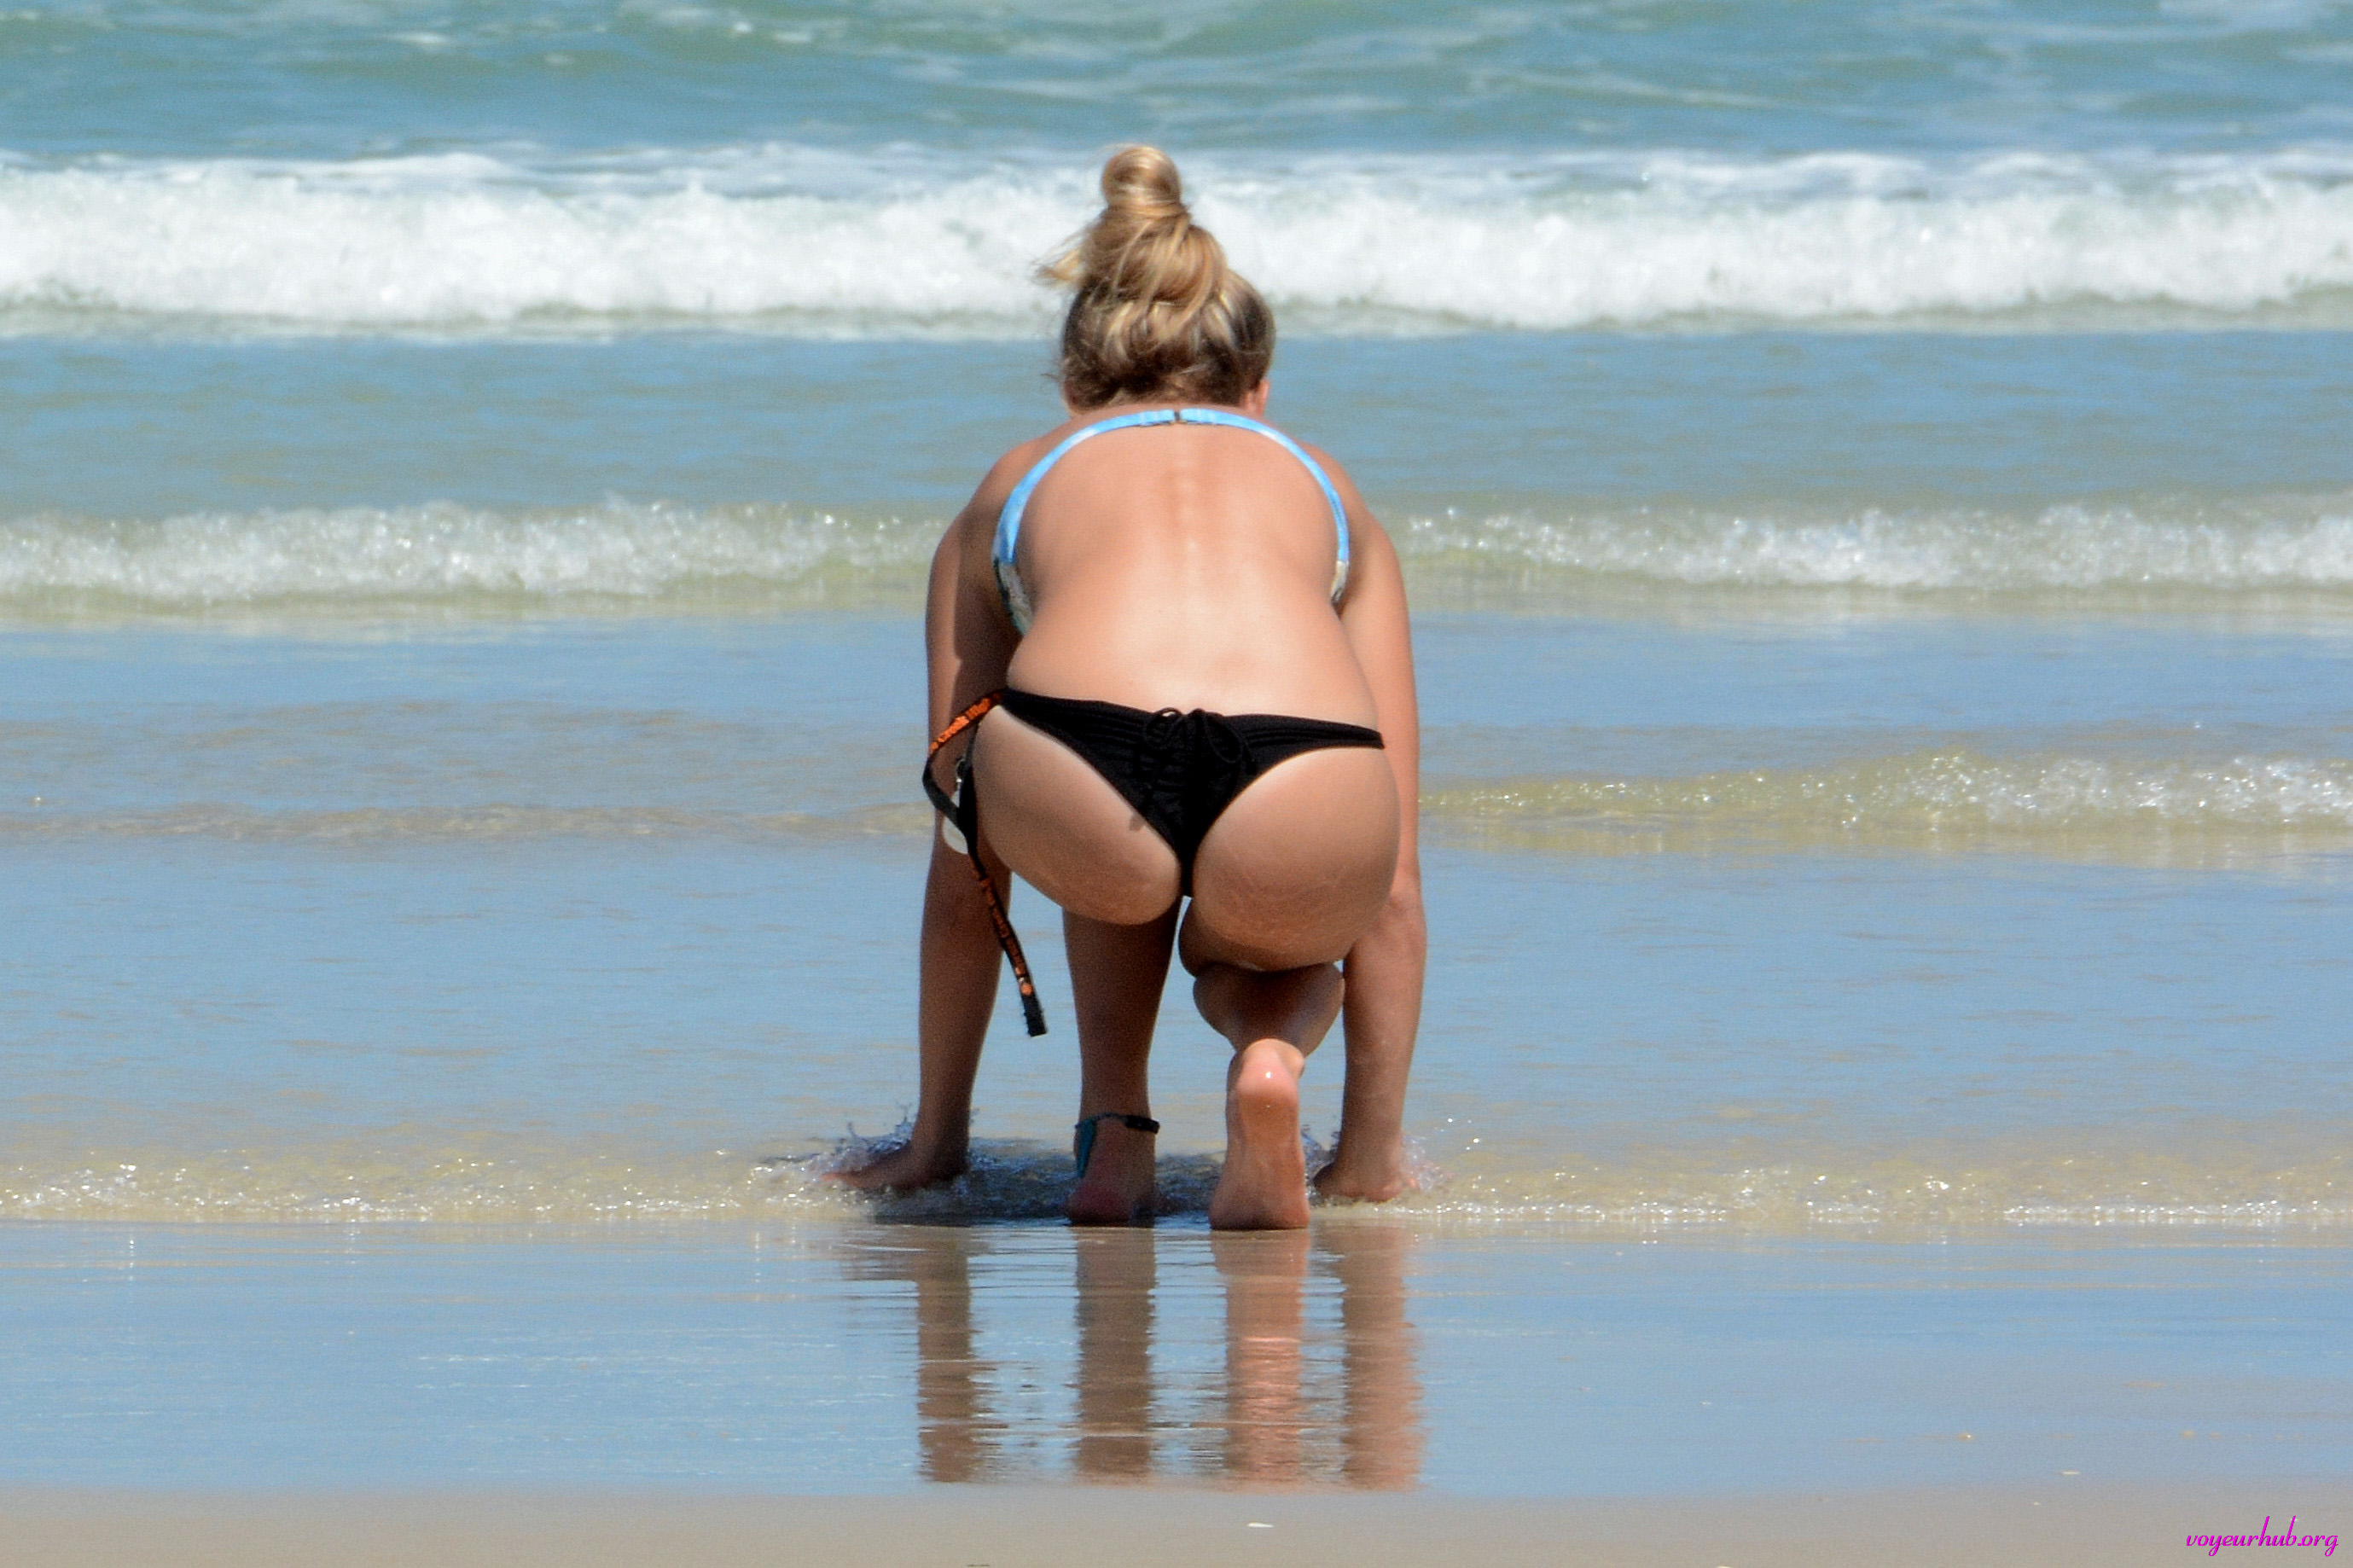 Thick Beach Voyeur - Voyeur beach pics of girls in bikinis at Daytona beach